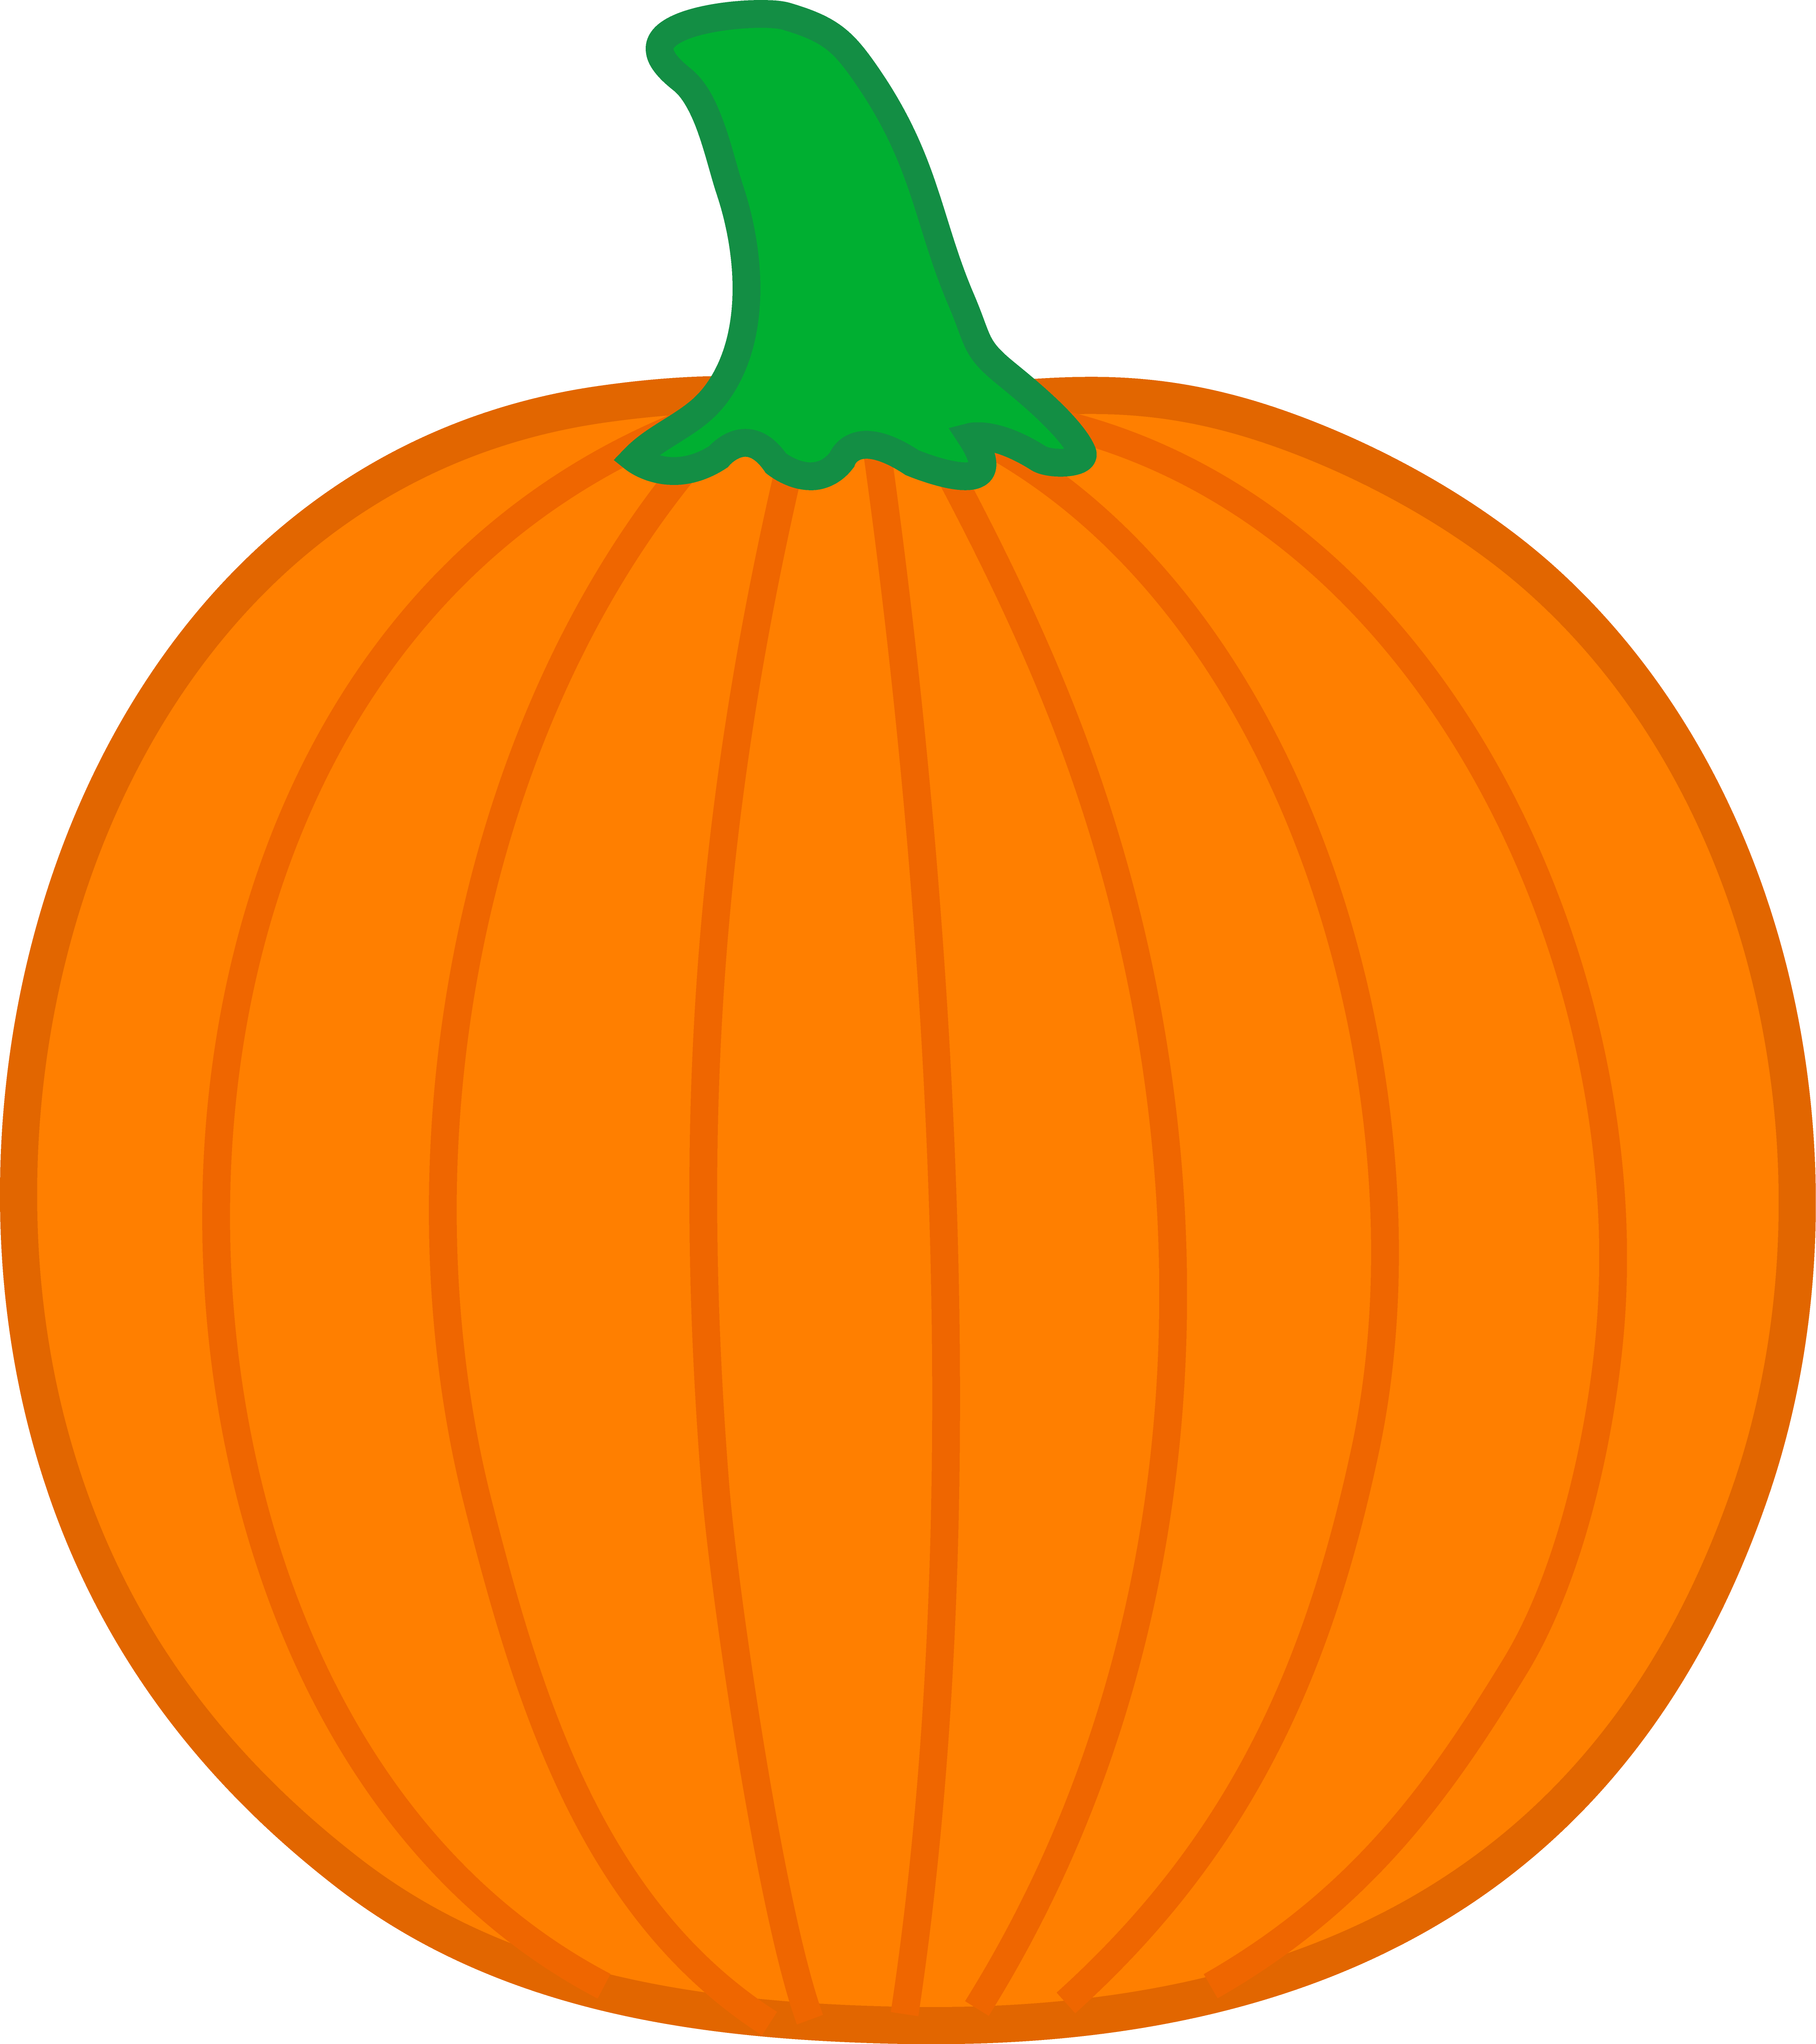 Orange Pumpkin Cartoon Illustration